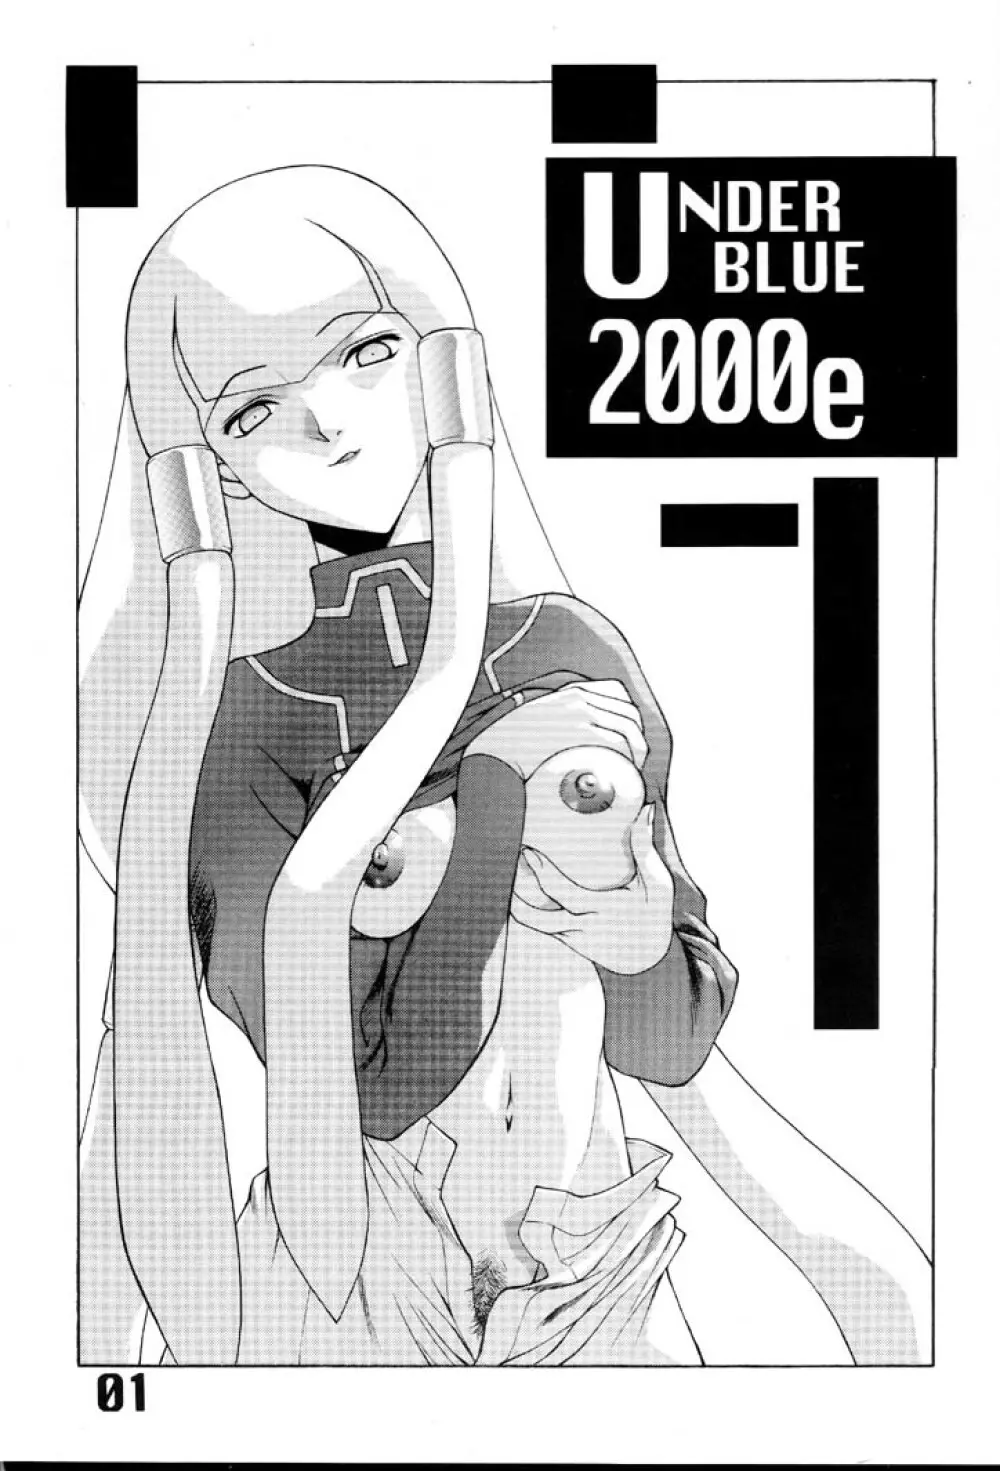 Under Blue 2000e - page2